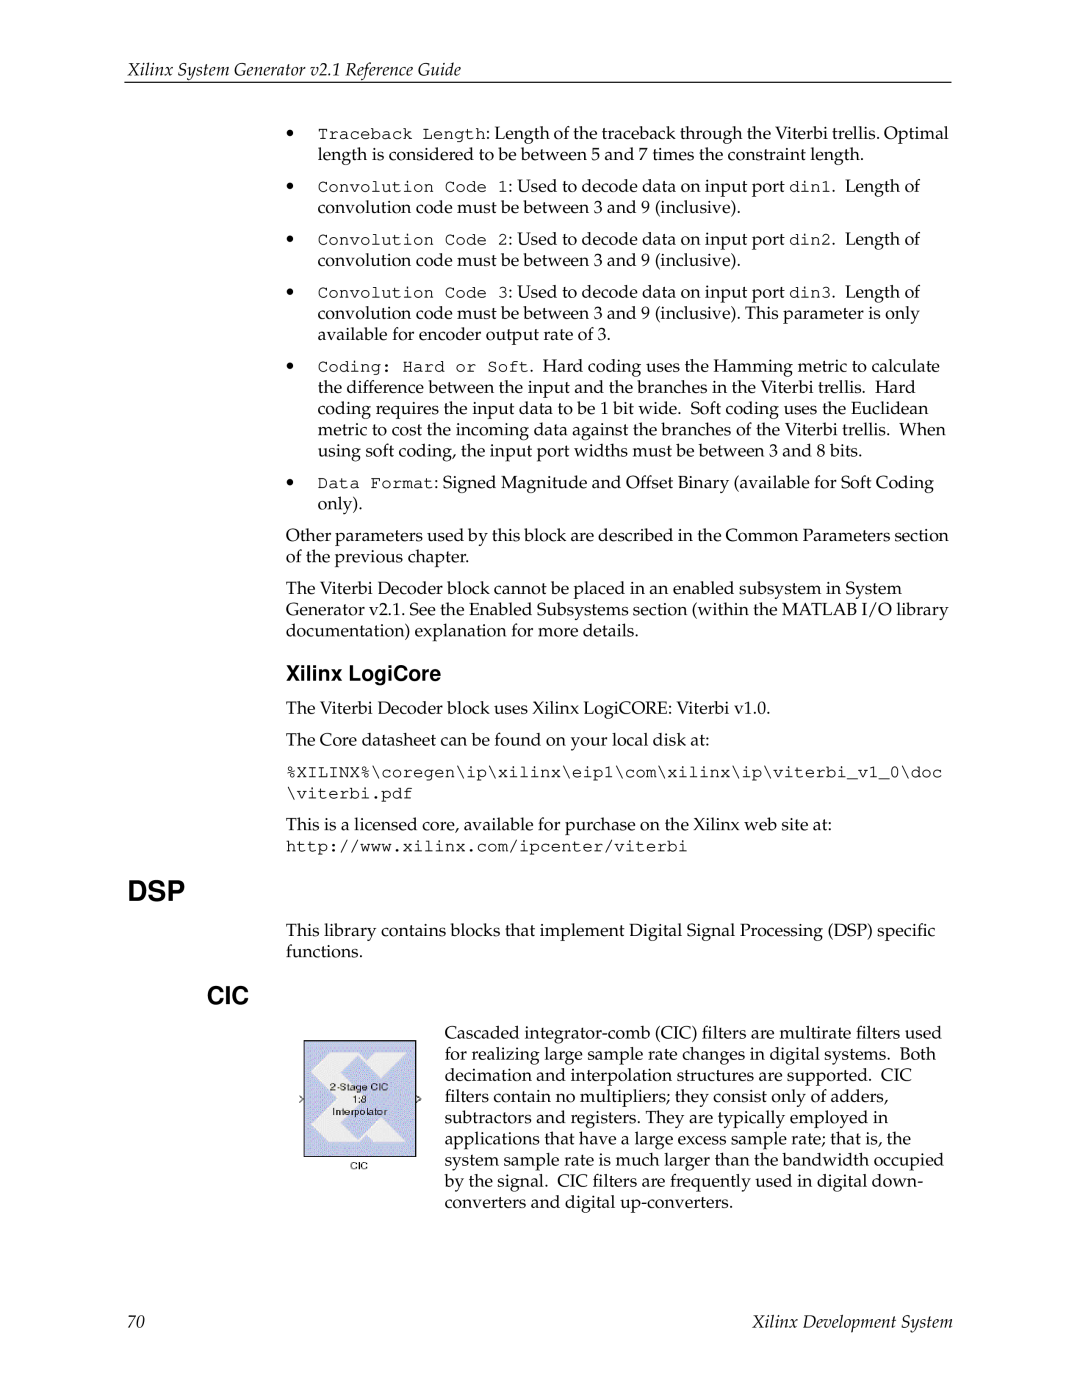 Xilinx V2.1 manual Xilinx LogiCore, Xilinx System Generator v2.1 Reference Guide, Xilinx Development System 